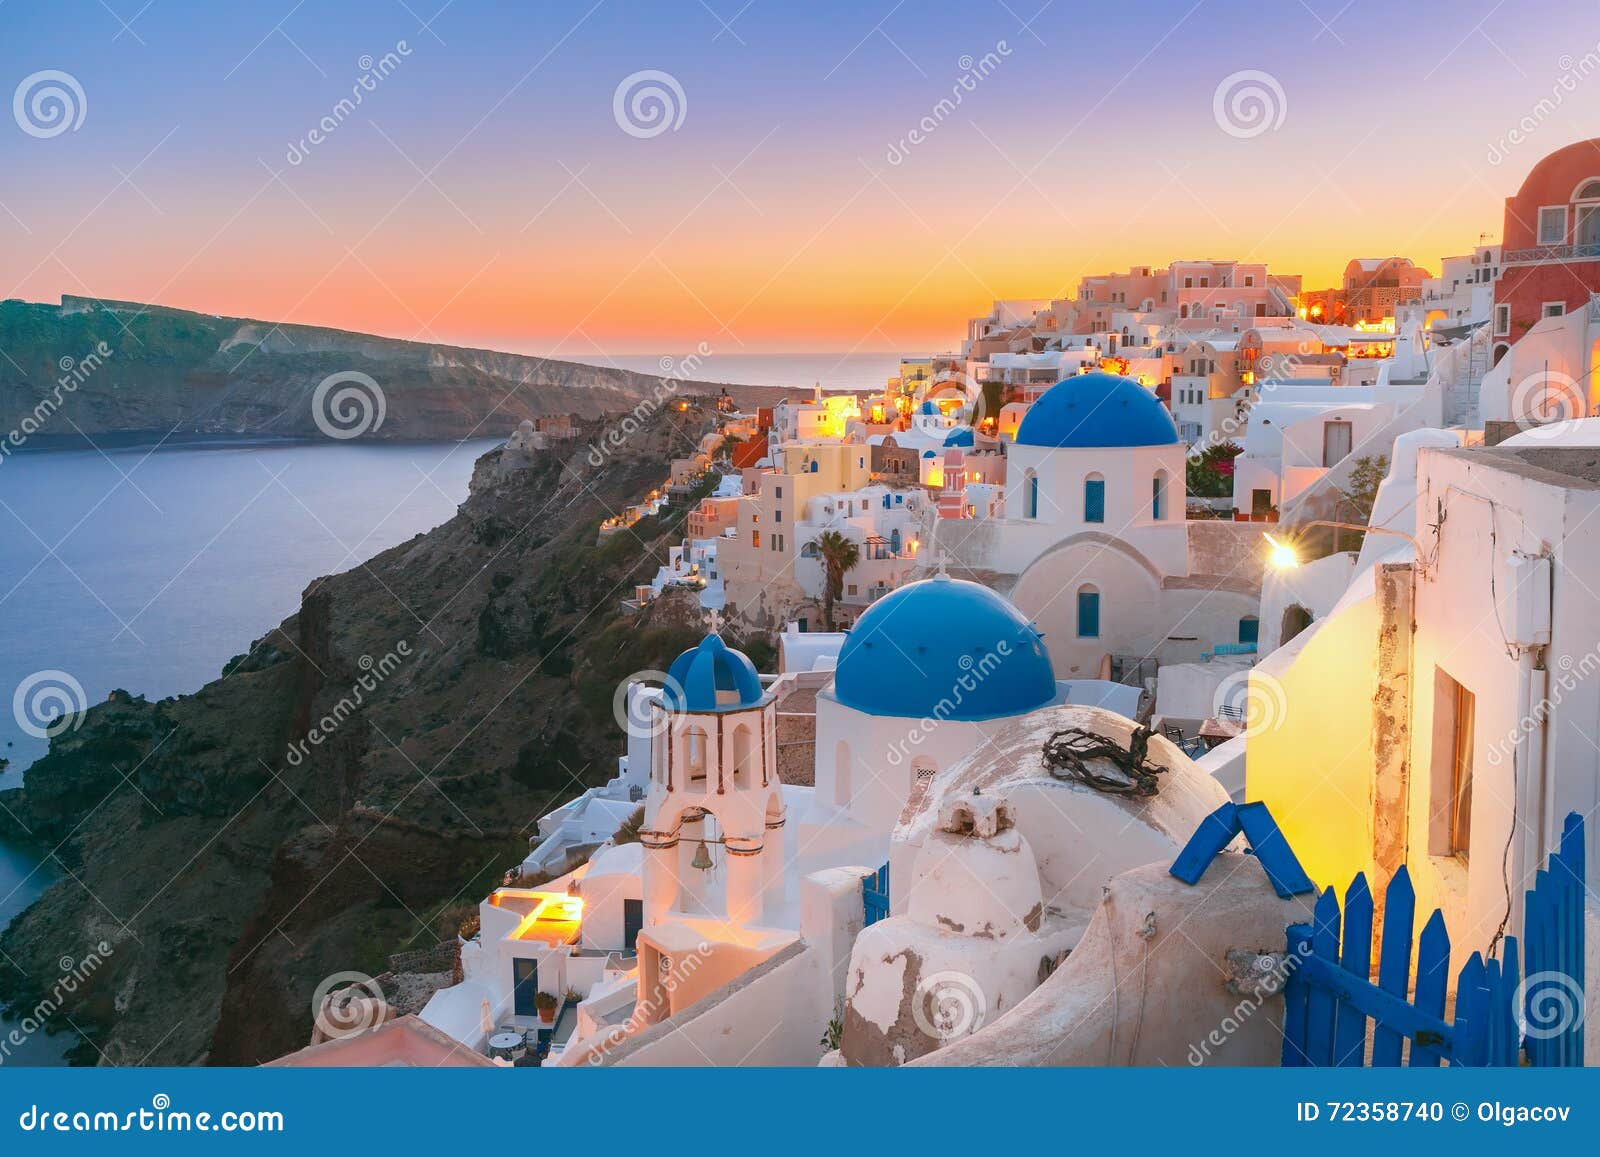 Oia At Sunset Santorini Greece Stock Photo Image Of